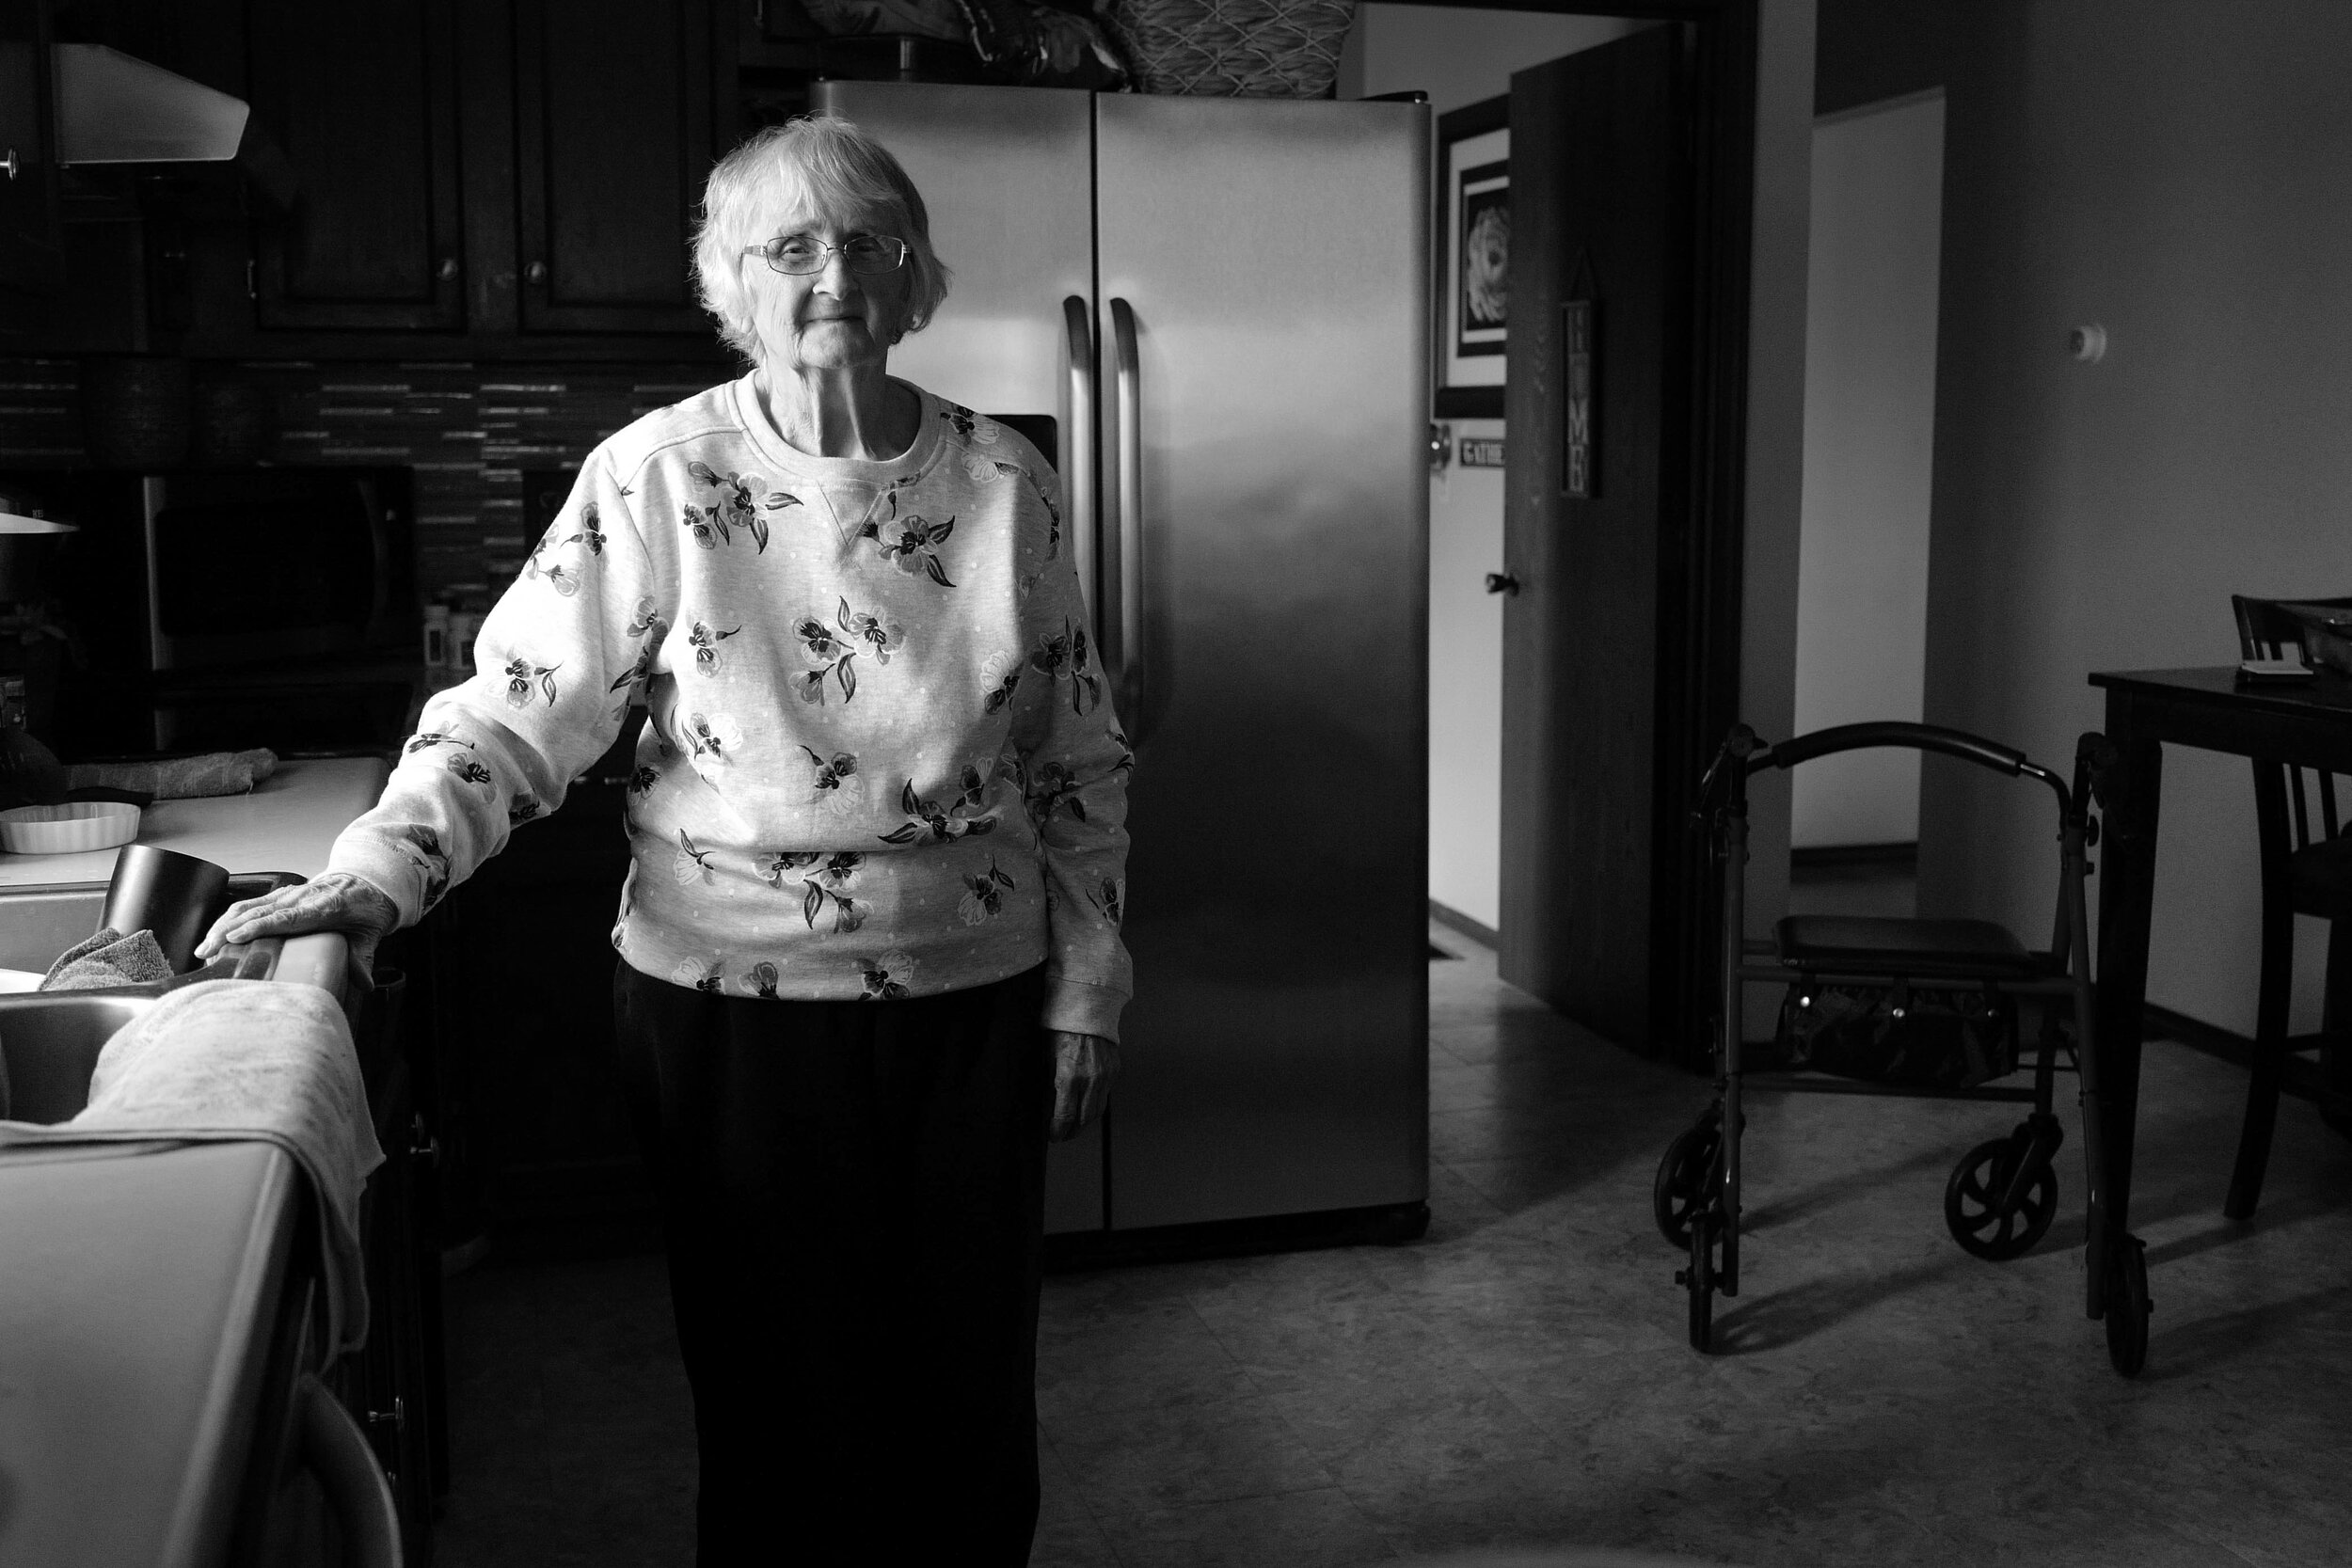  91 years of perception, Grandma - Shot with Leica Q. 